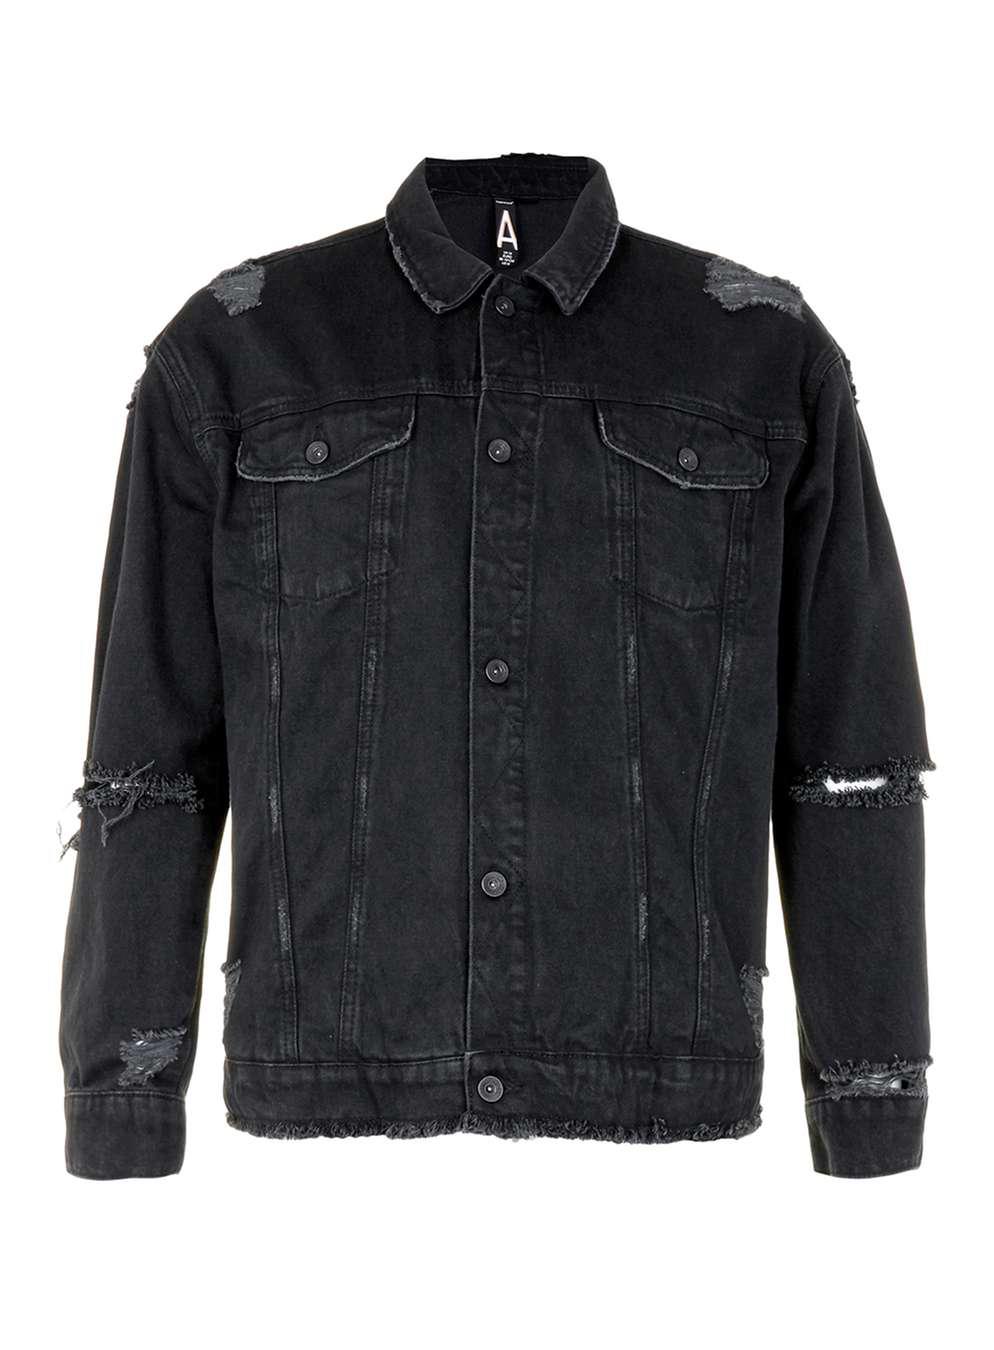 TOPMAN Aaa Black Distressed Oversized Denim Jacket for Men - Lyst